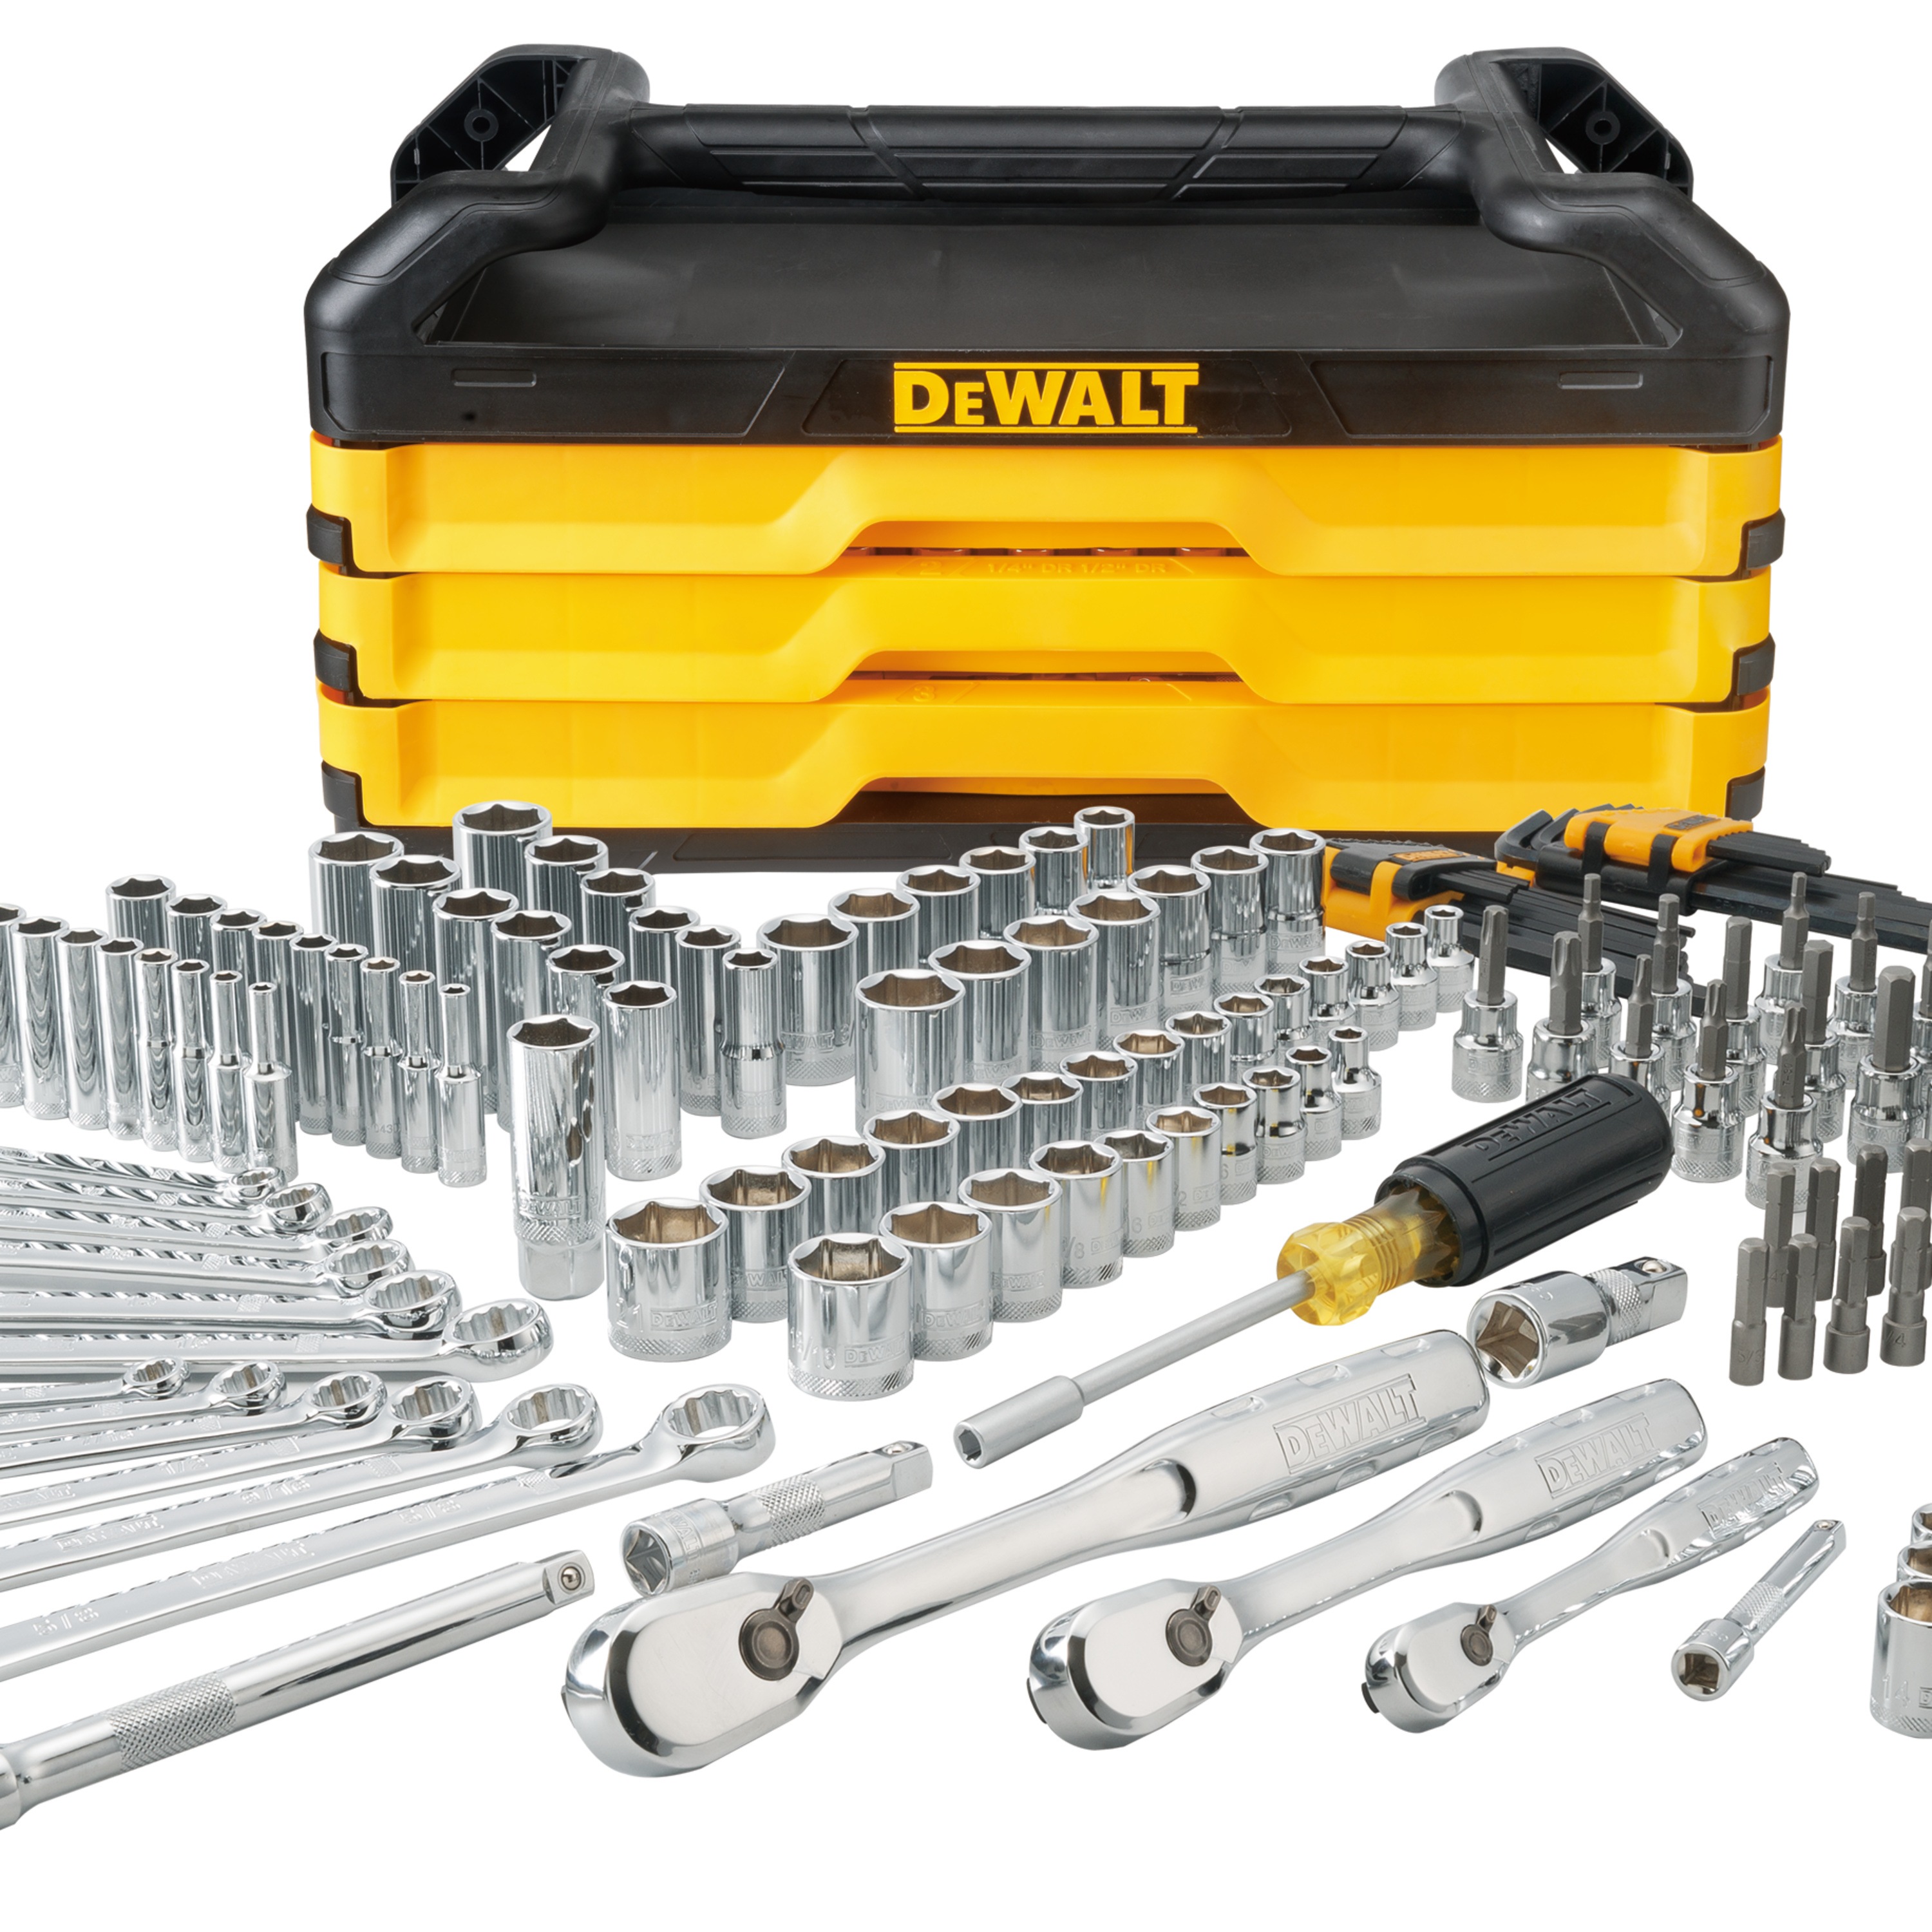 227 piece DEWALT mechanics tools set with its complete kit.